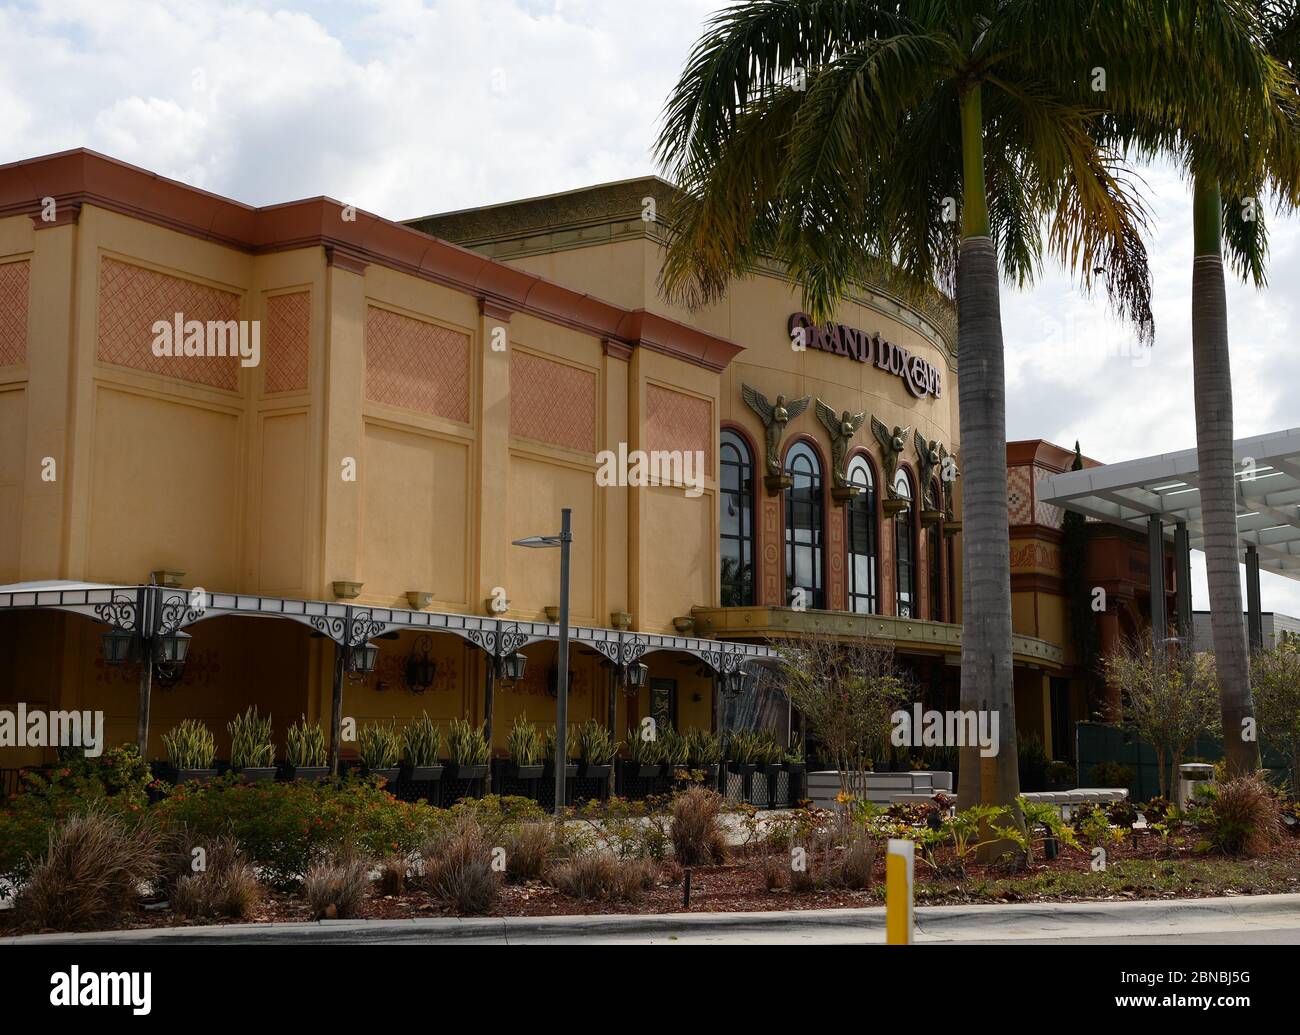 Town Center Mall Completes Multi-Million-Dollar Renovations • Boca